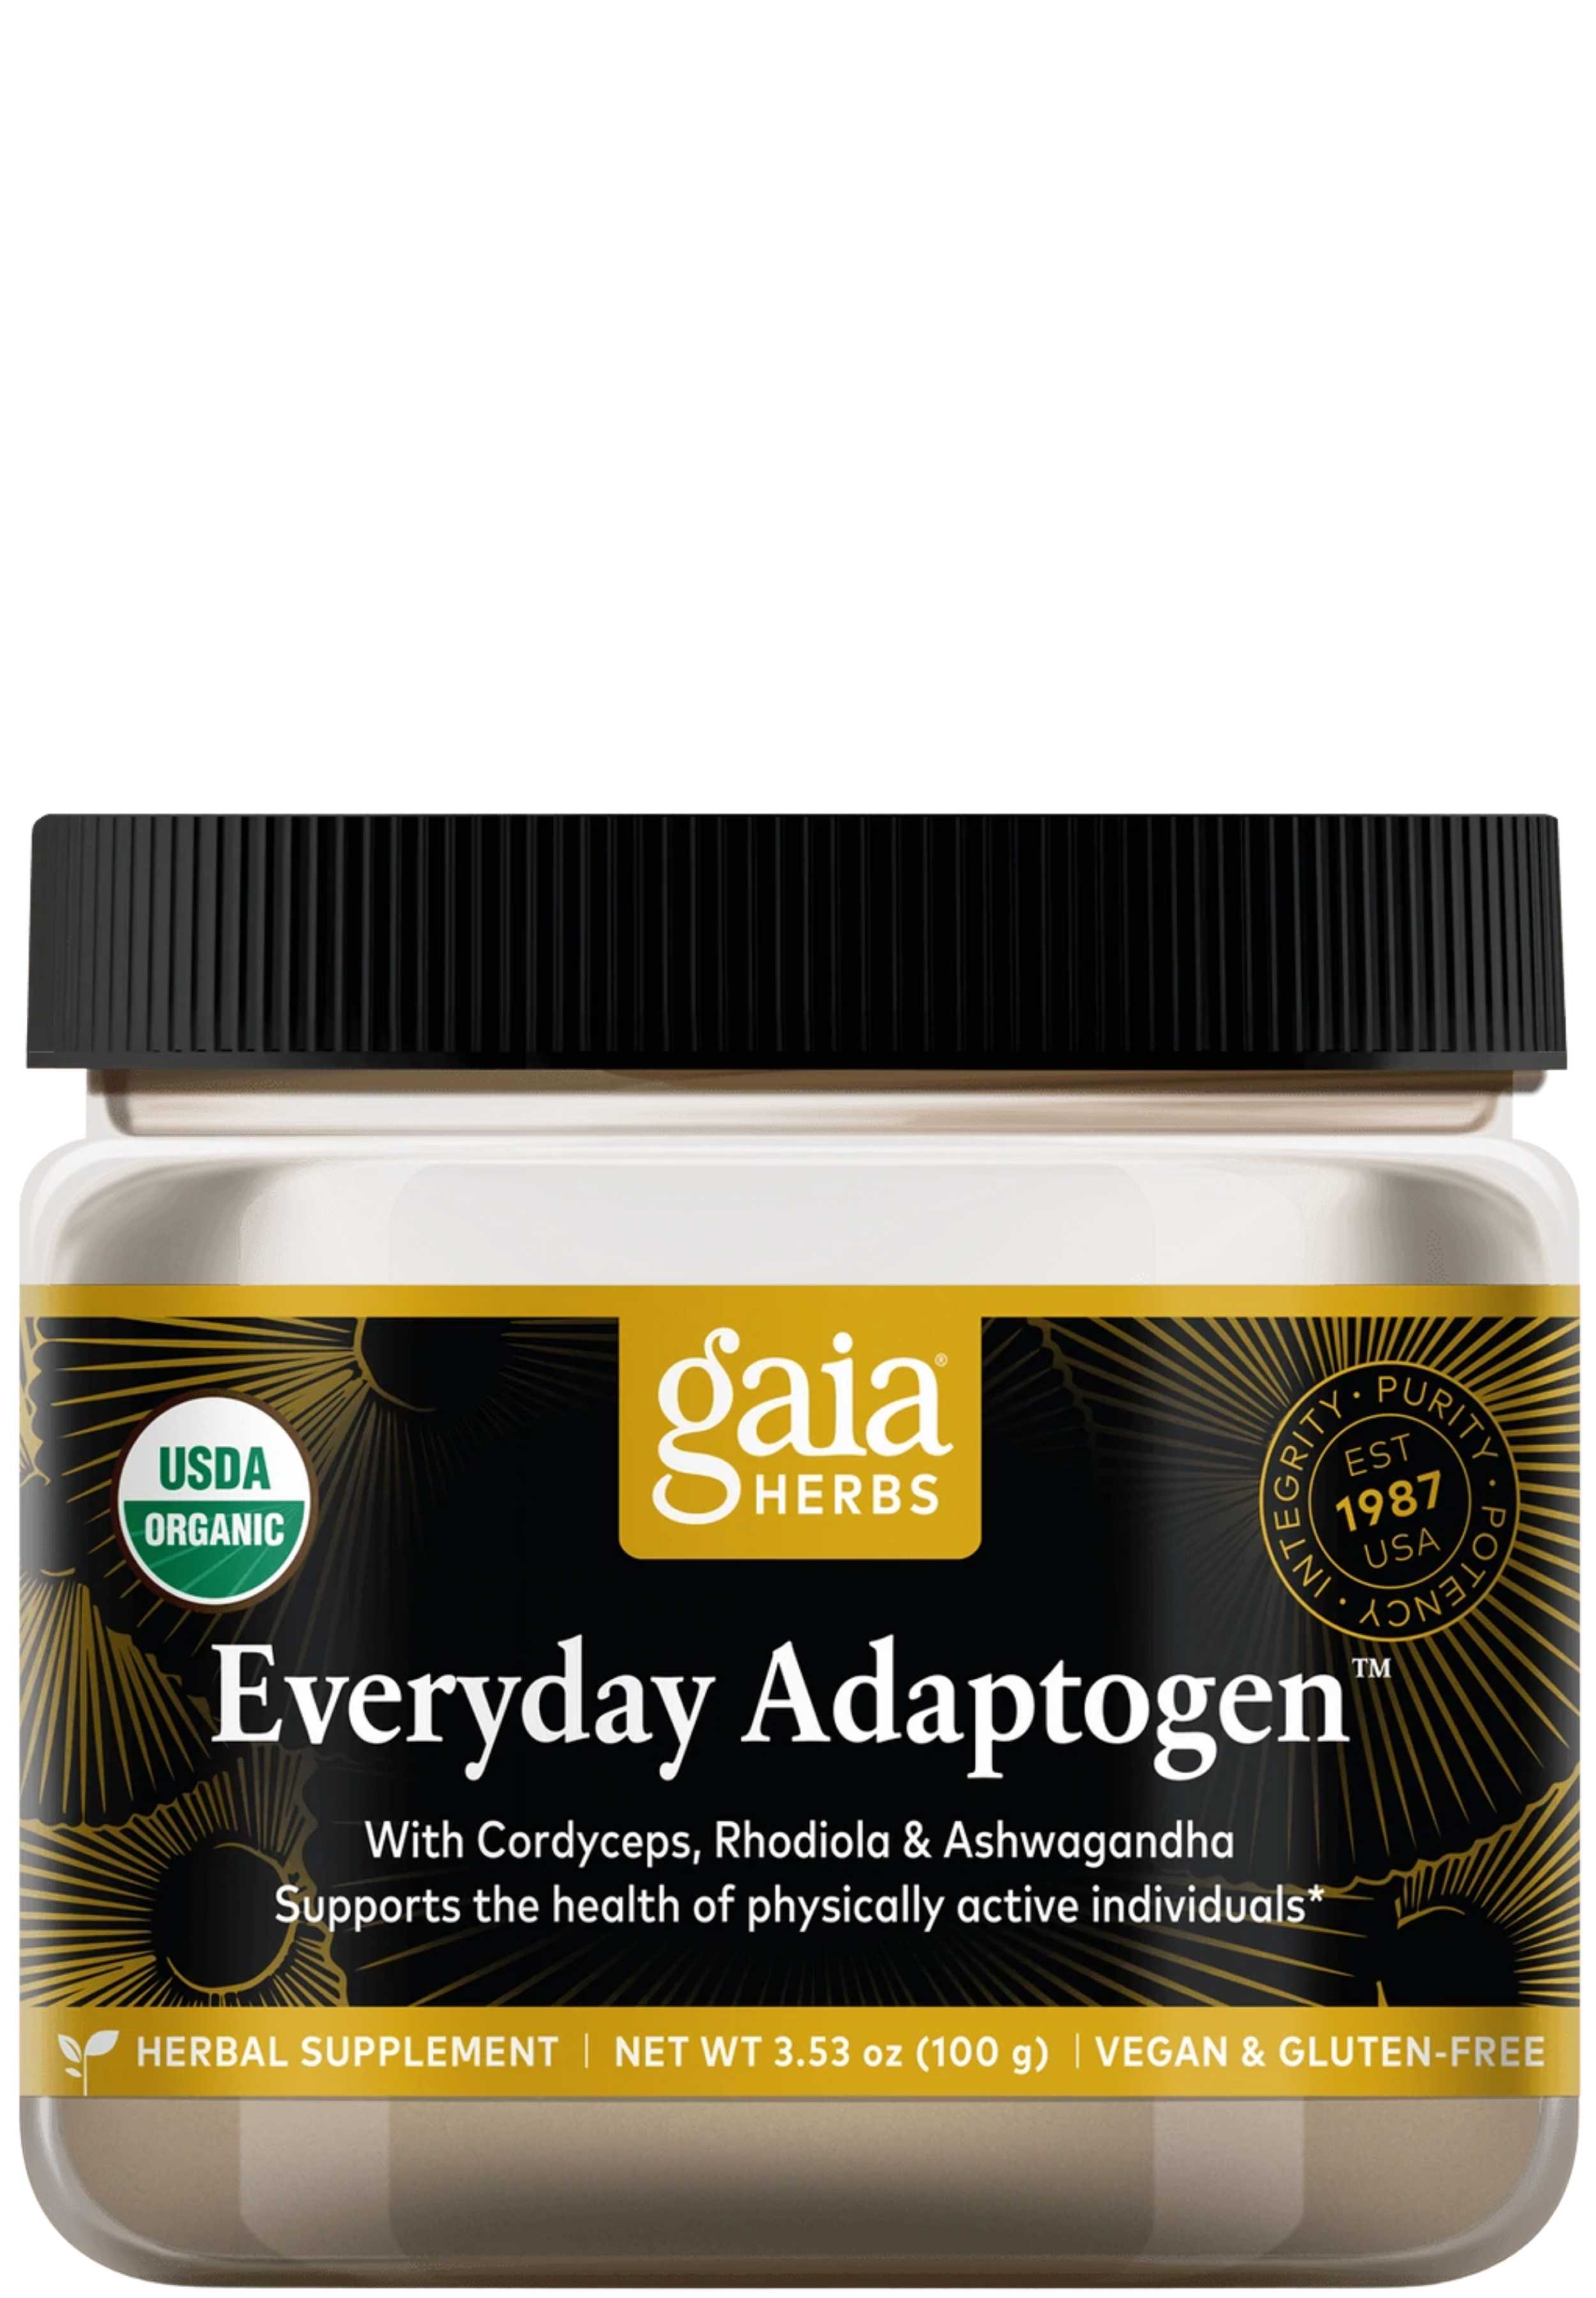 Gaia Herbs Everyday Adaptogen